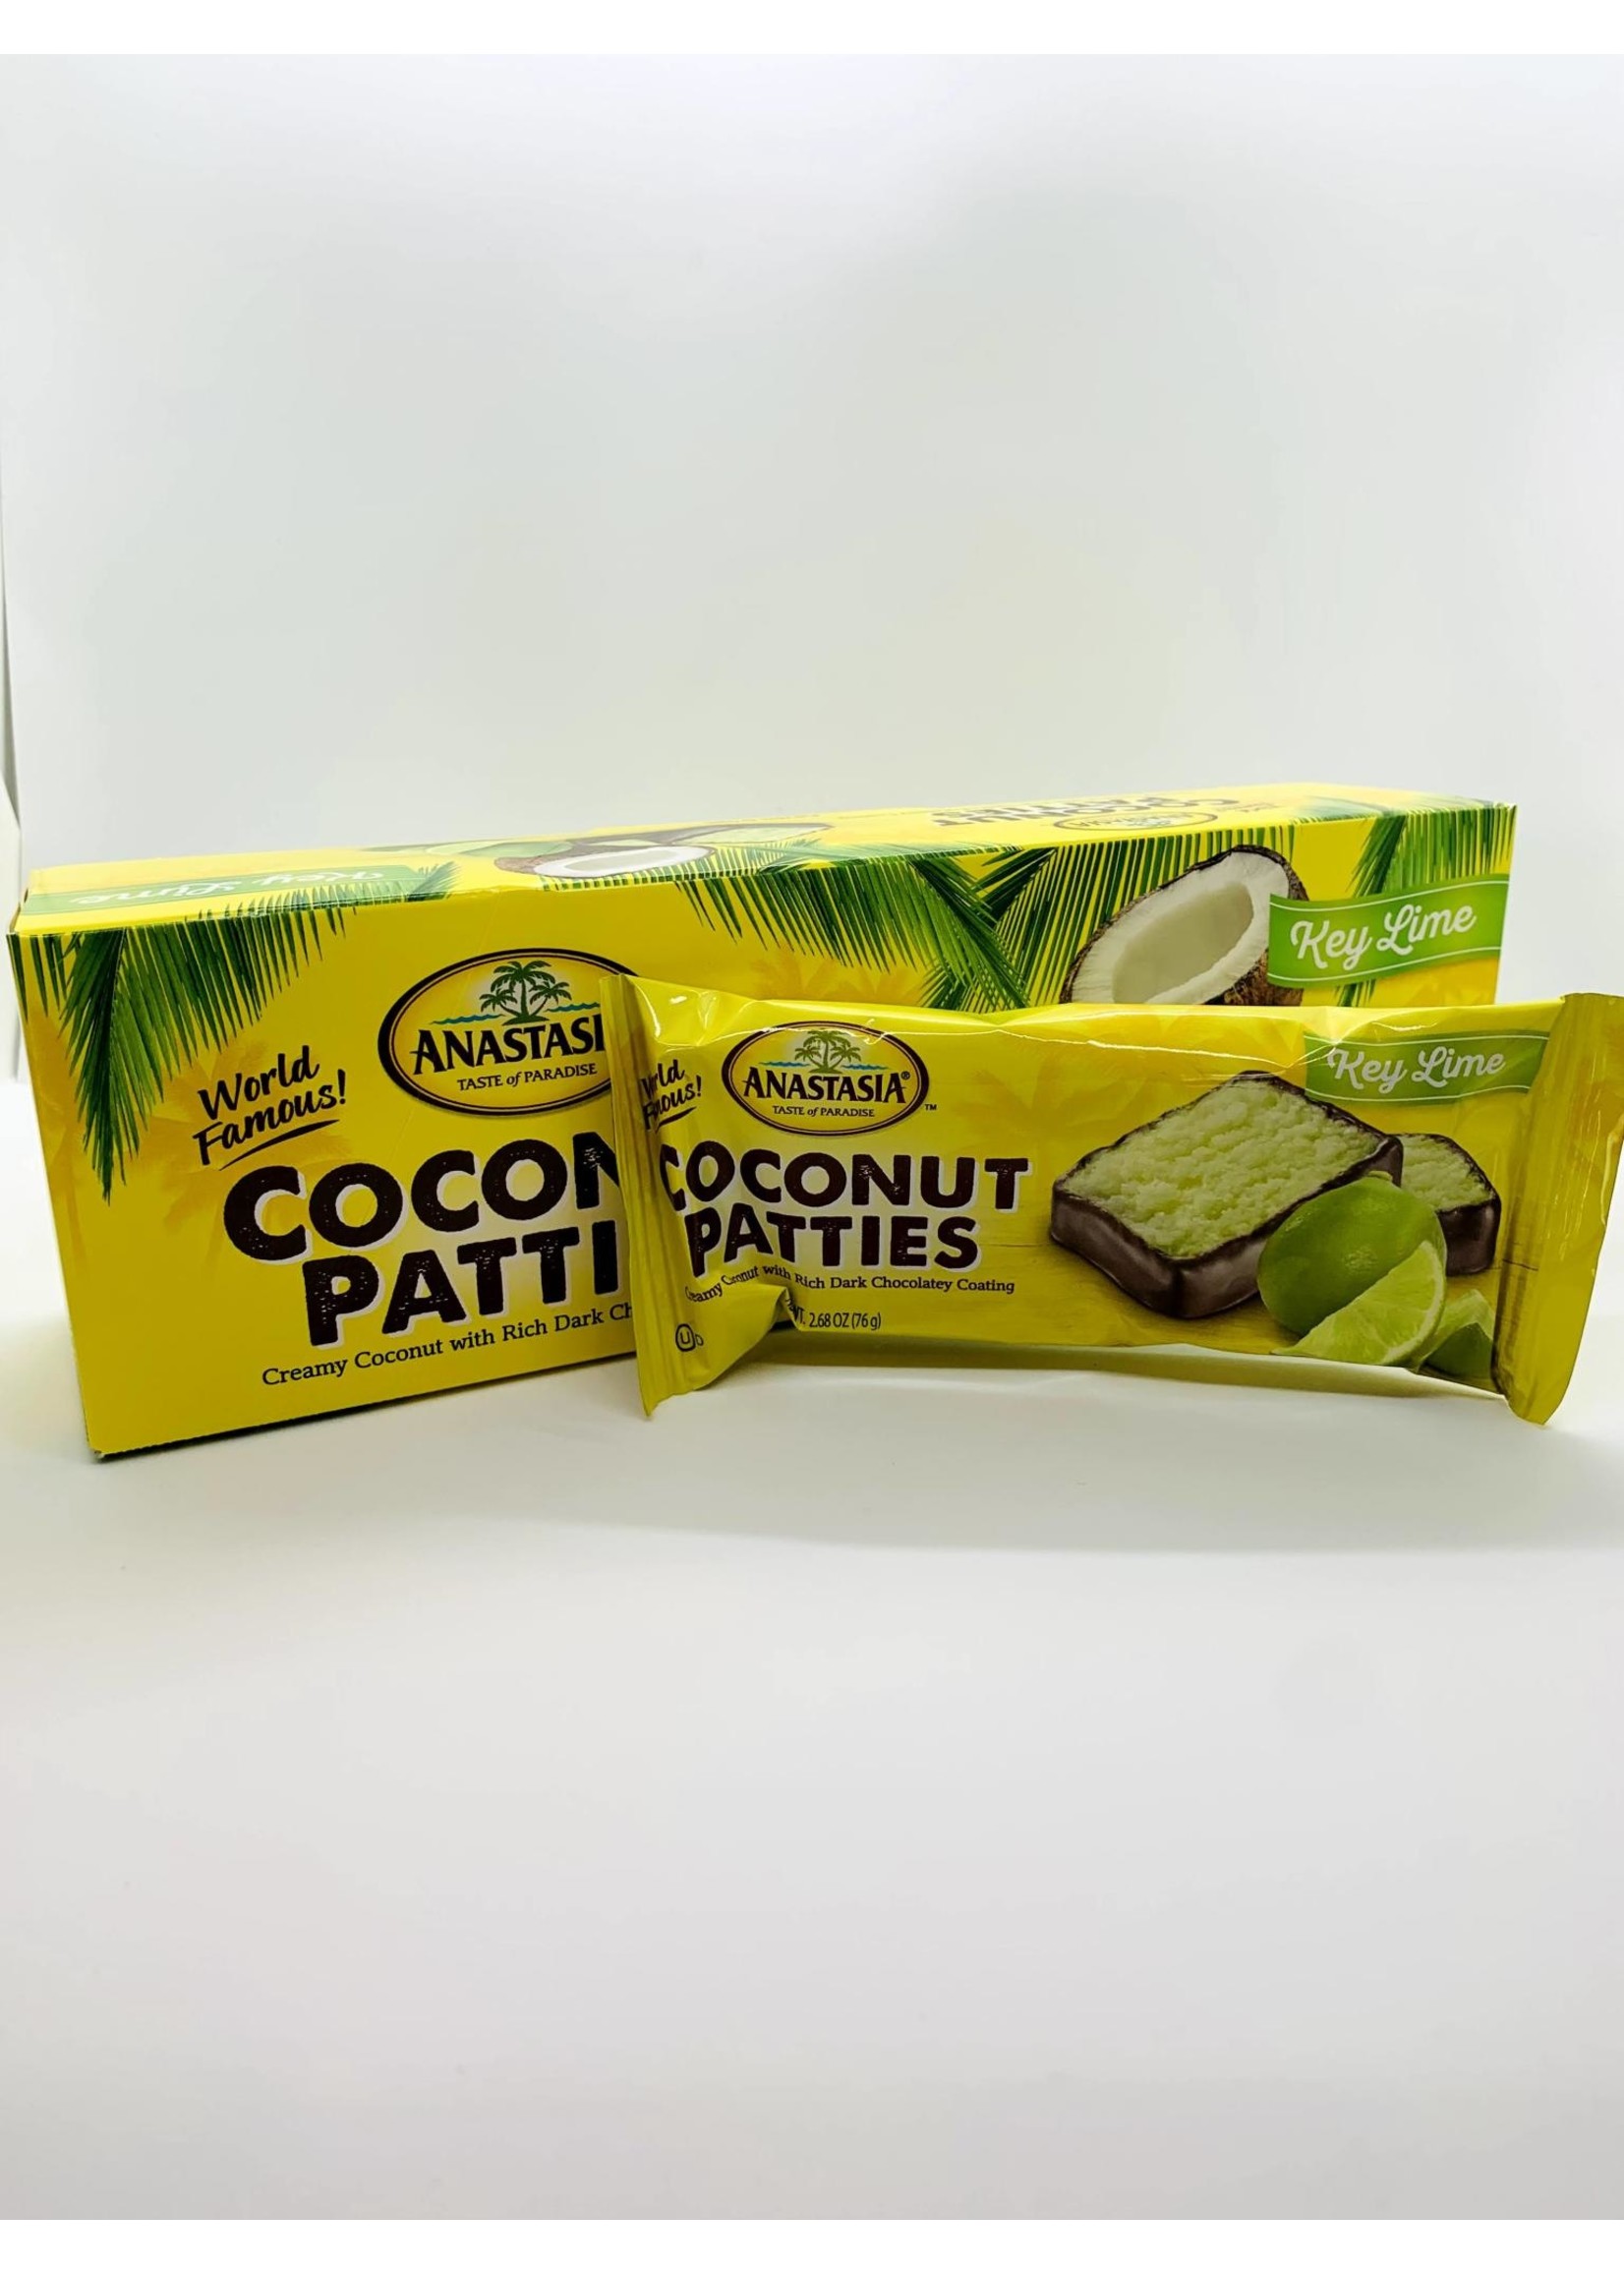 Key Lime Coconut Patties